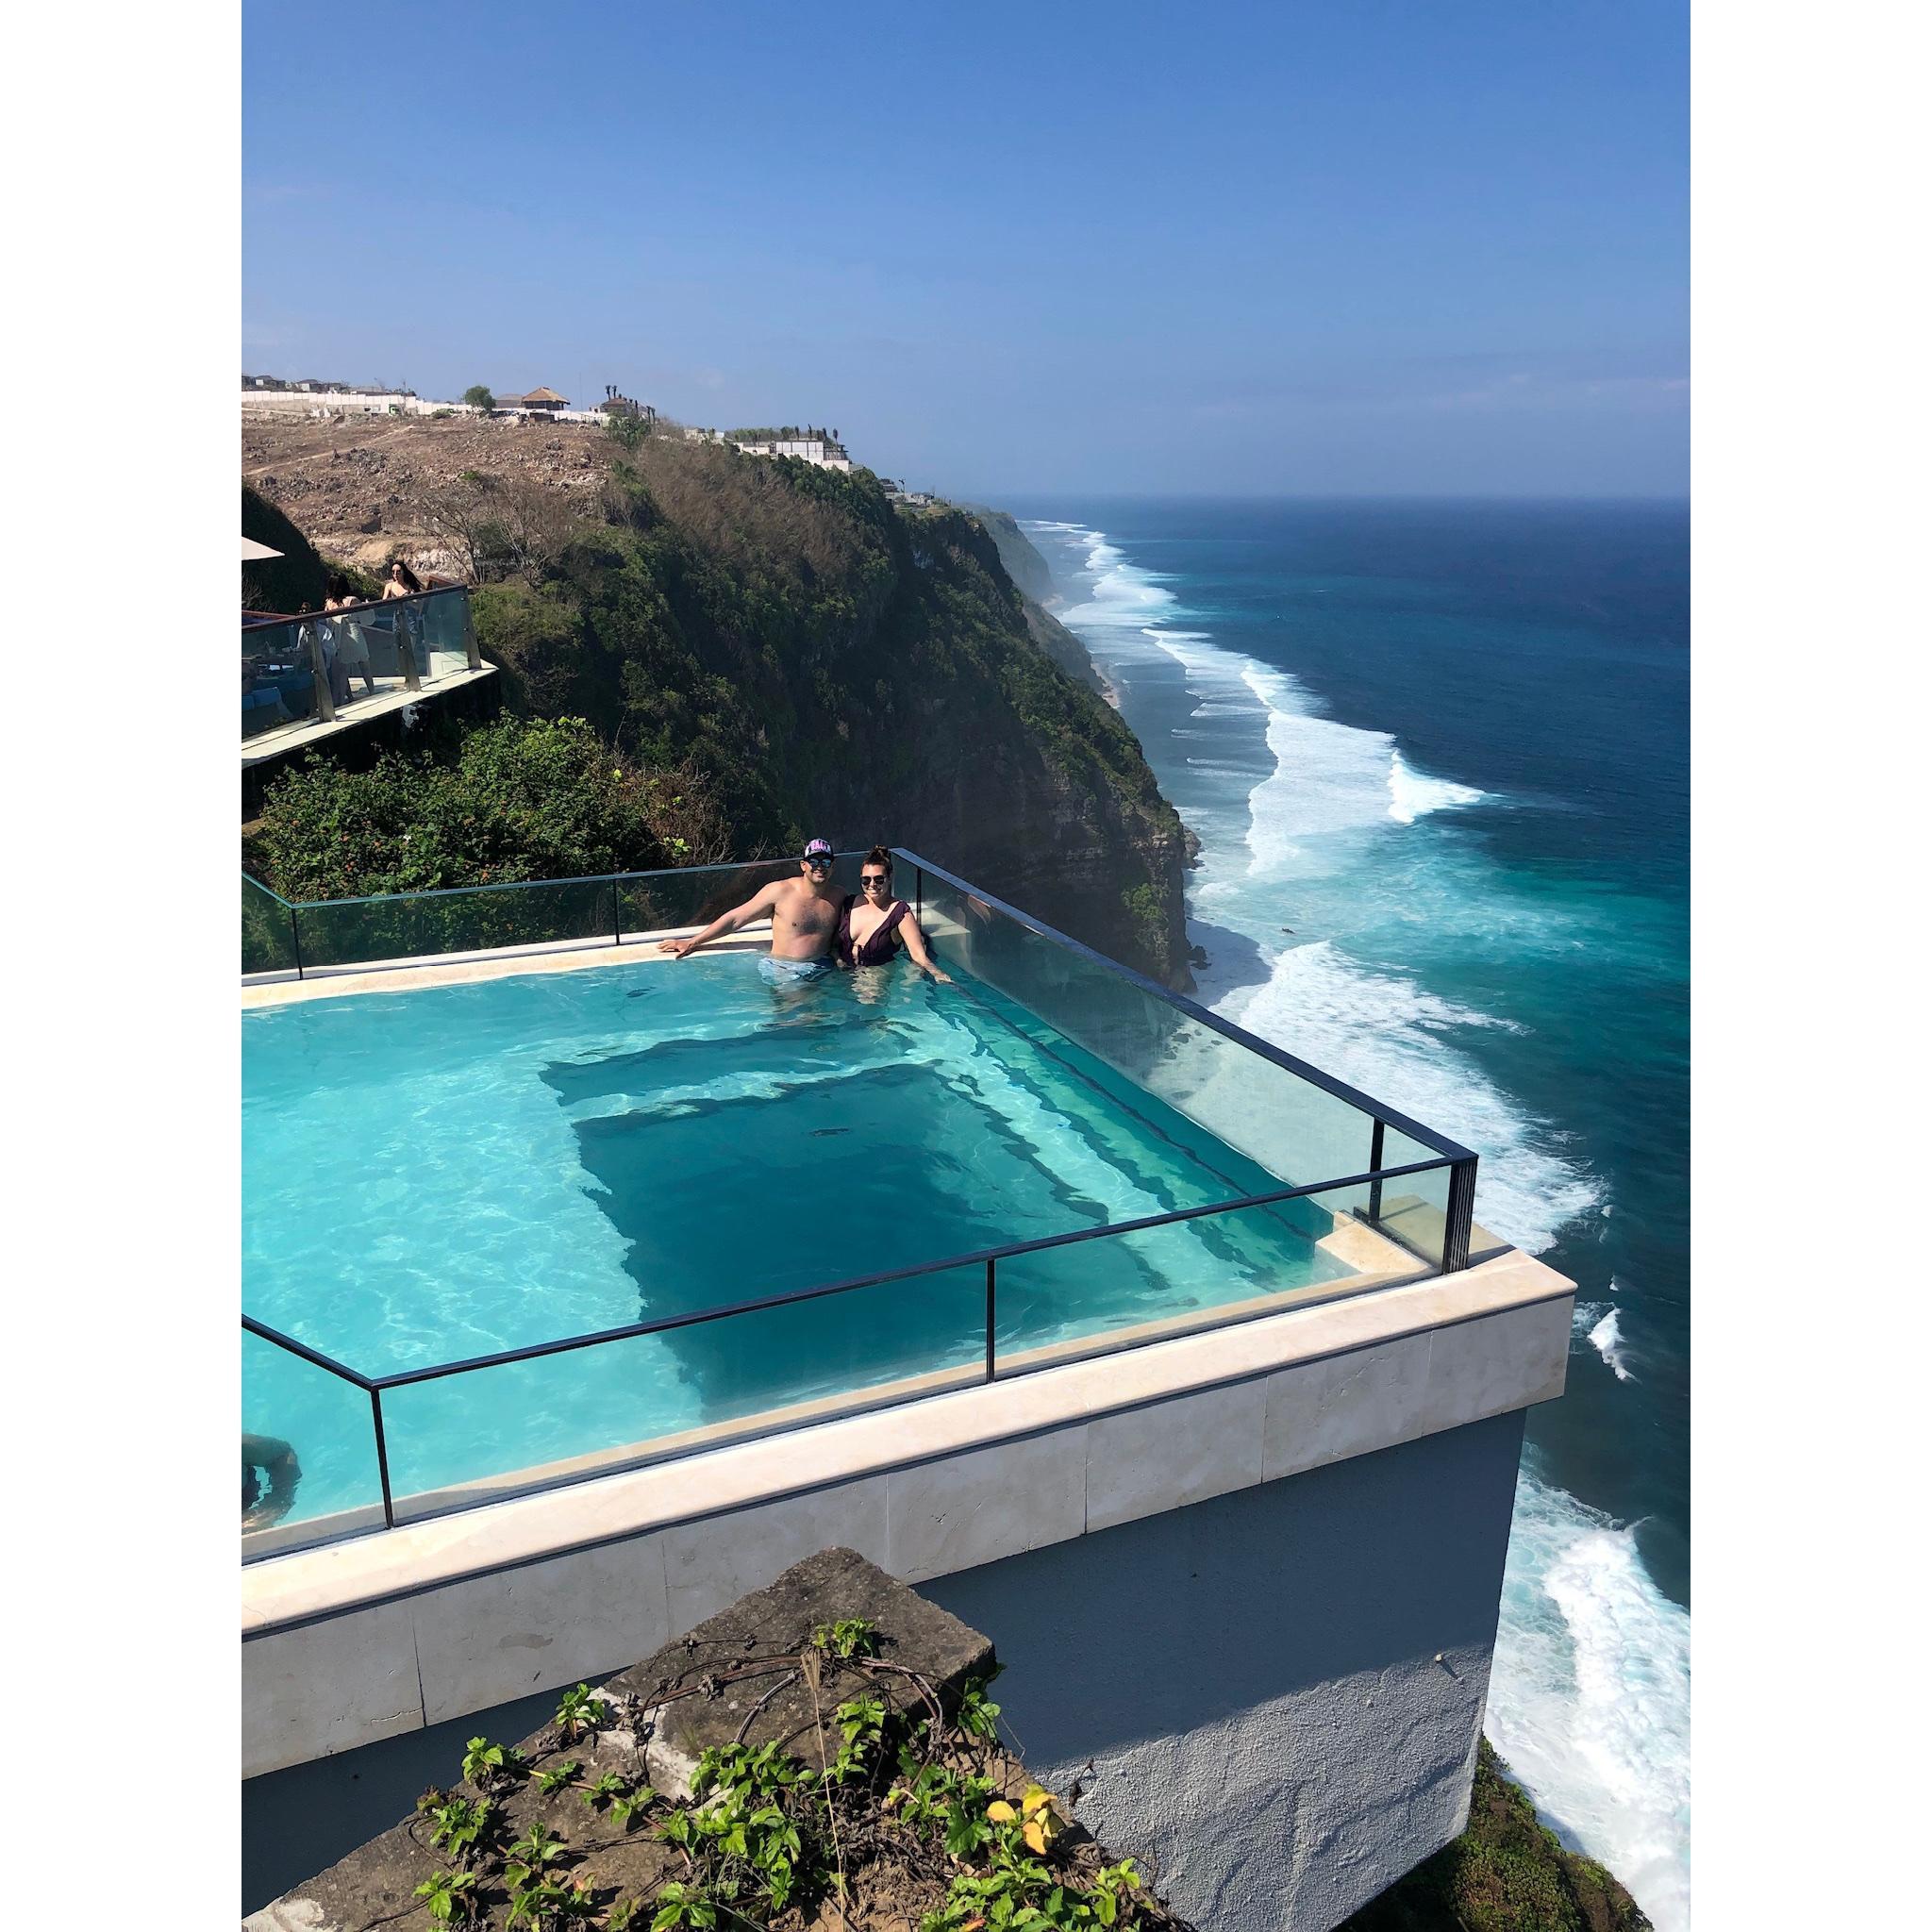 Bali, Indonesia 2019